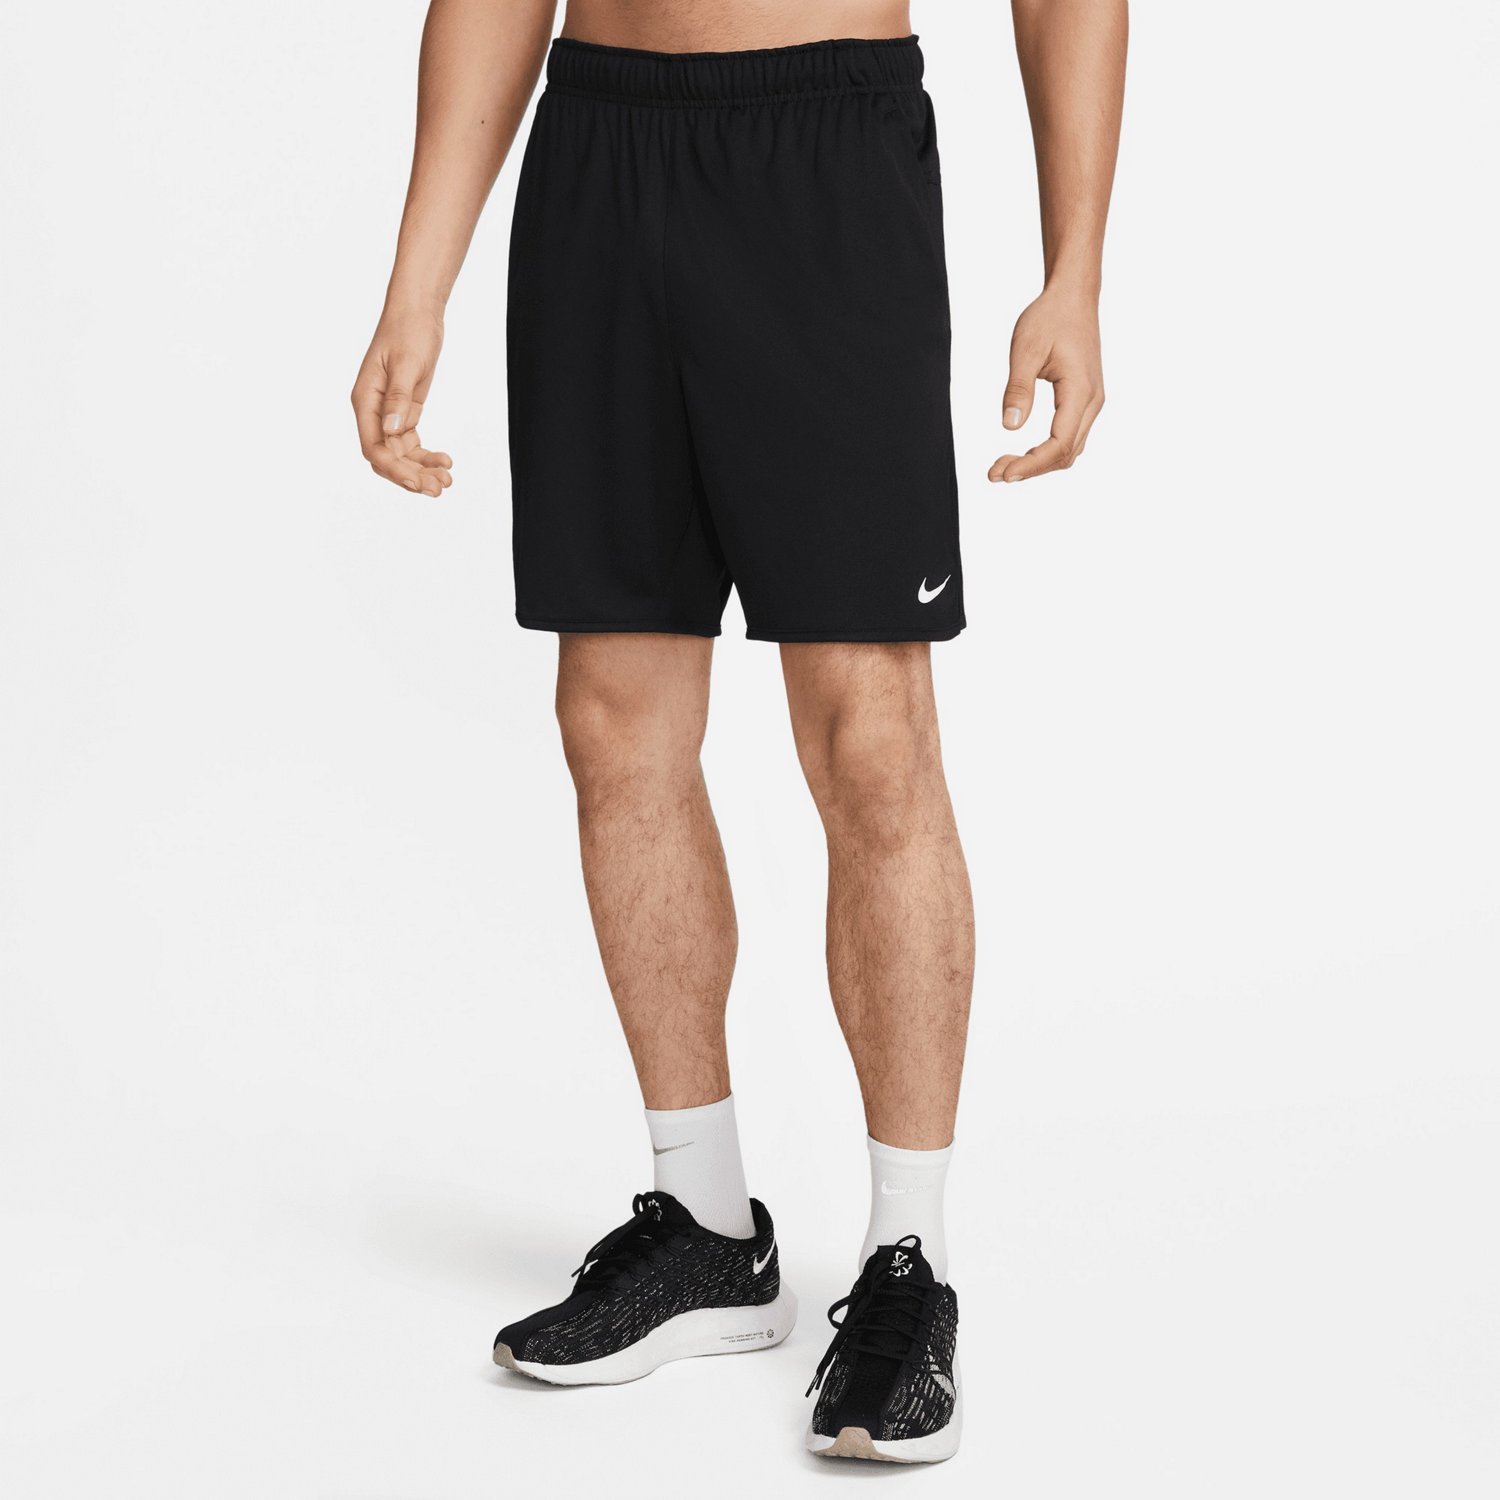 Nike Dri-FIT One 7in Women's Running Shorts - Black/White